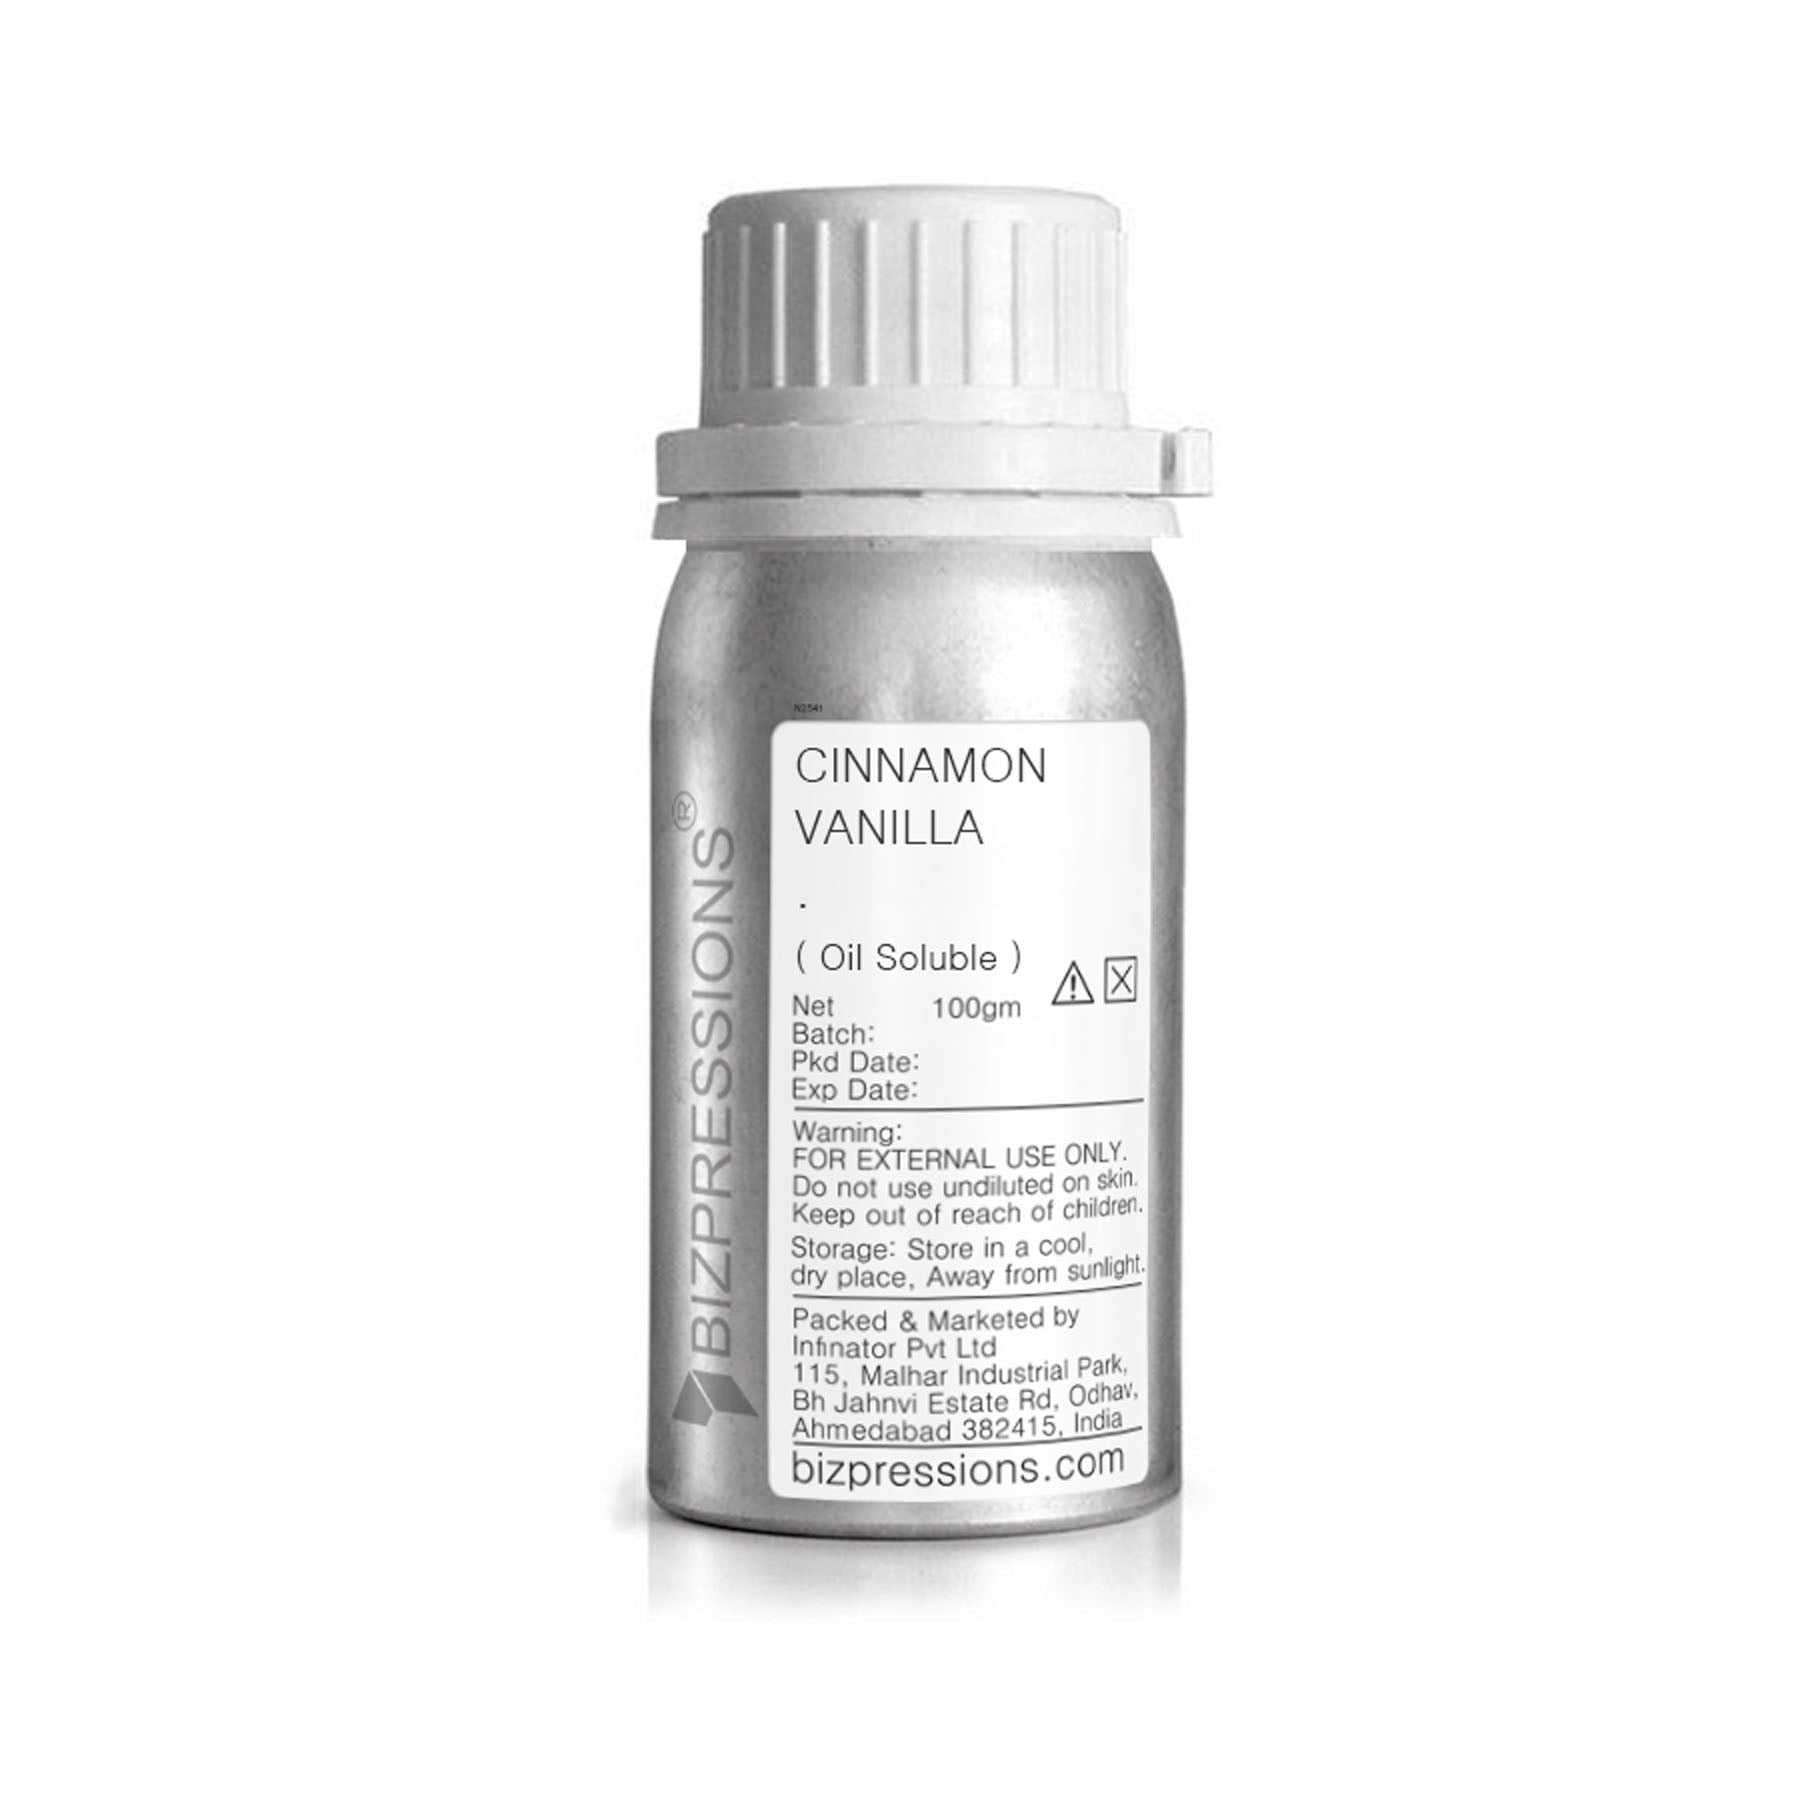 CINNAMON VANILLA - Fragrance ( Oil Soluble )